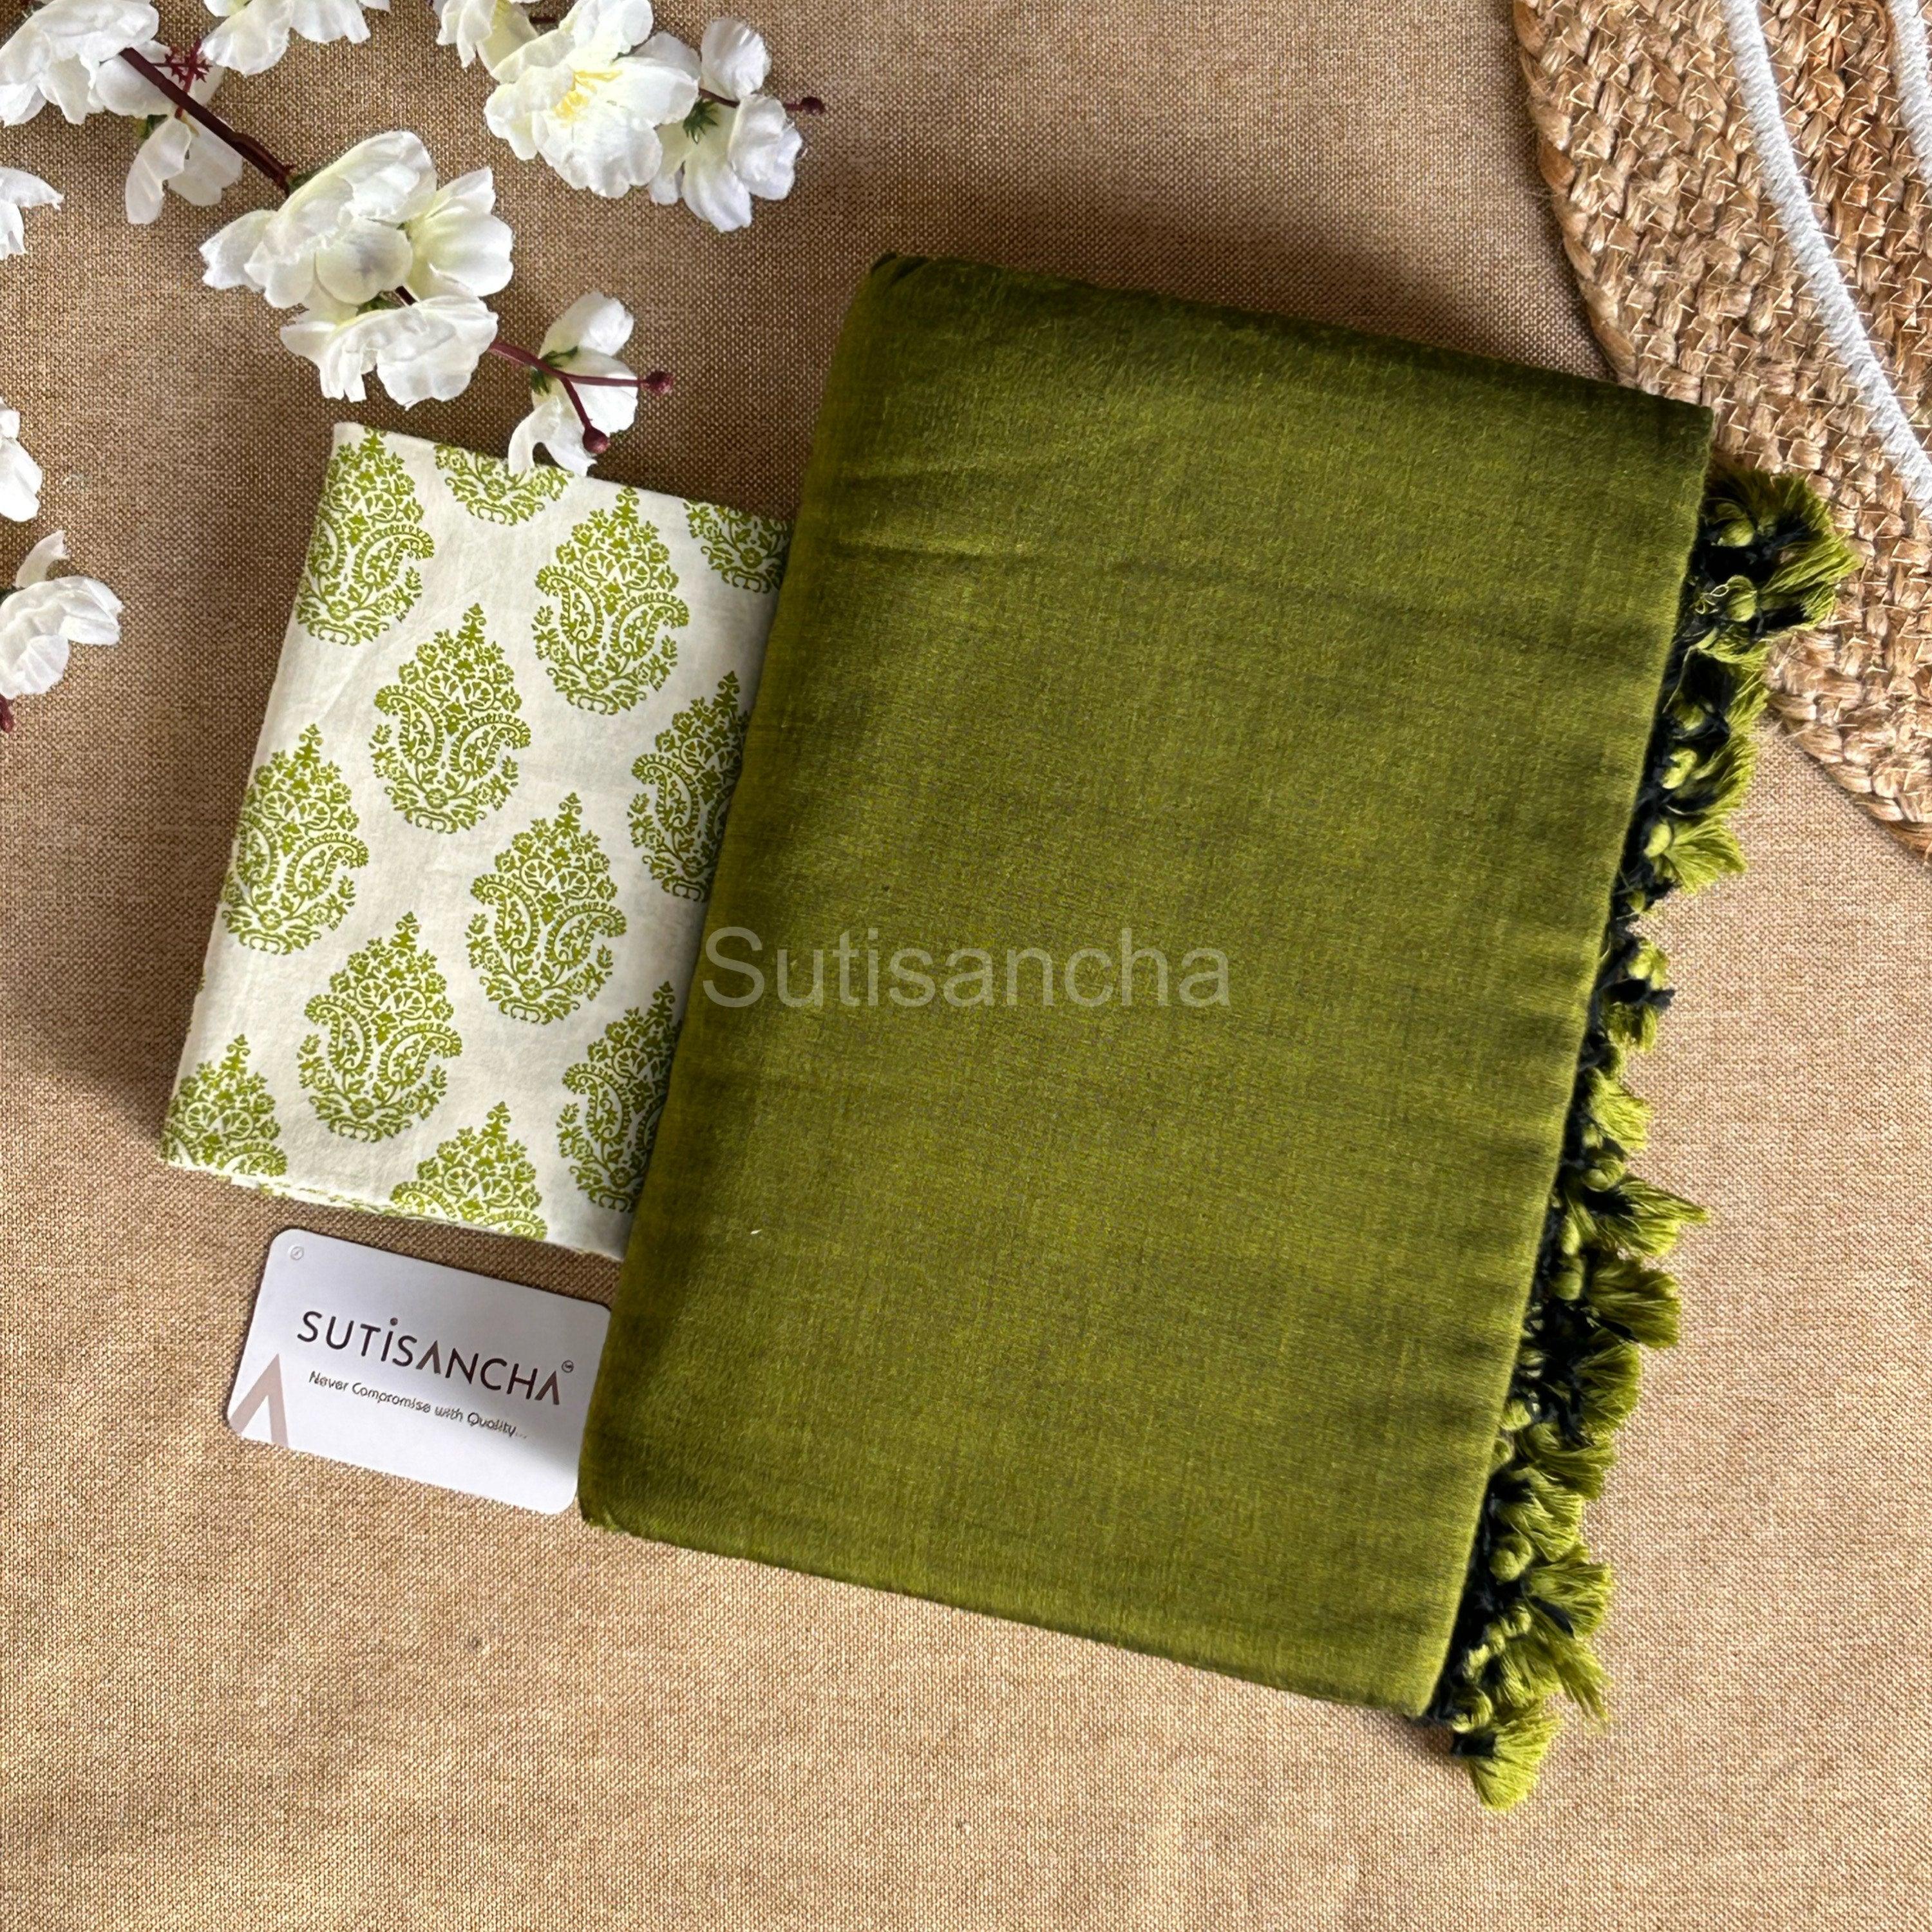 Sutisancha Mehendi Khadi Saree & Cotton Design Blouse - Suti Sancha